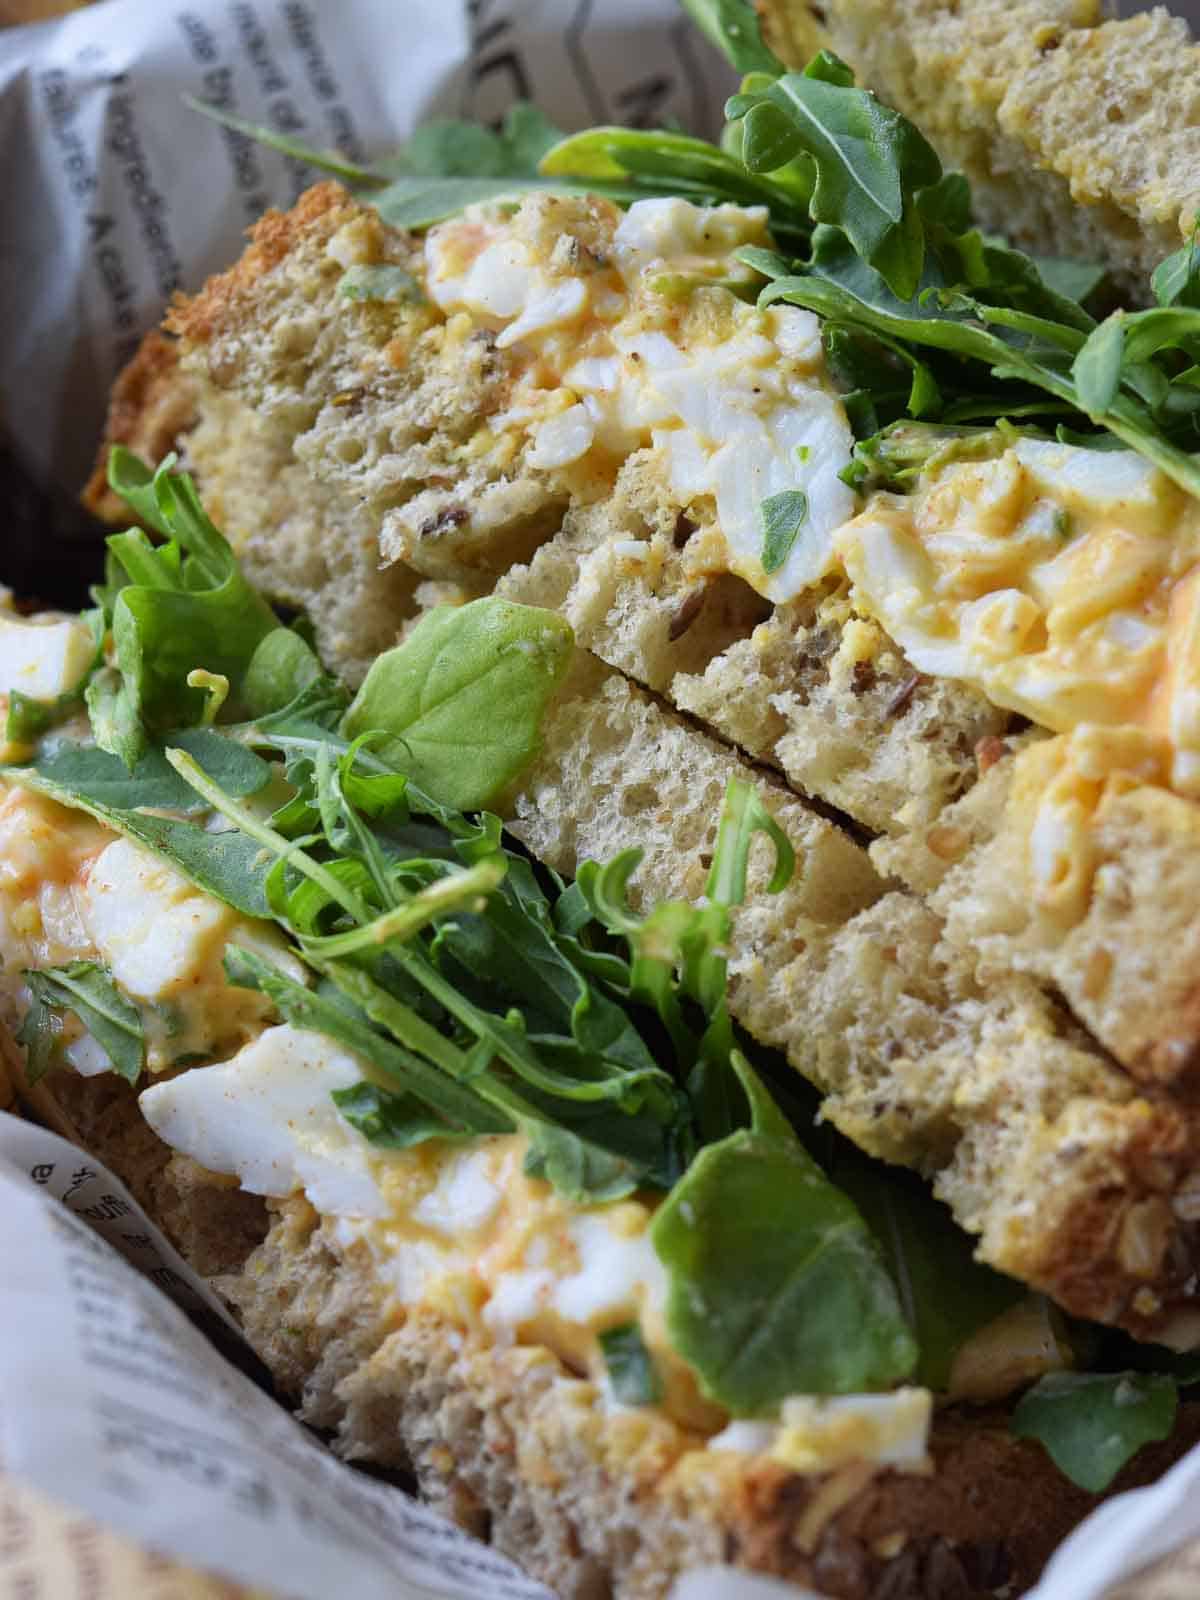 Egg salad sandwich in a basket.